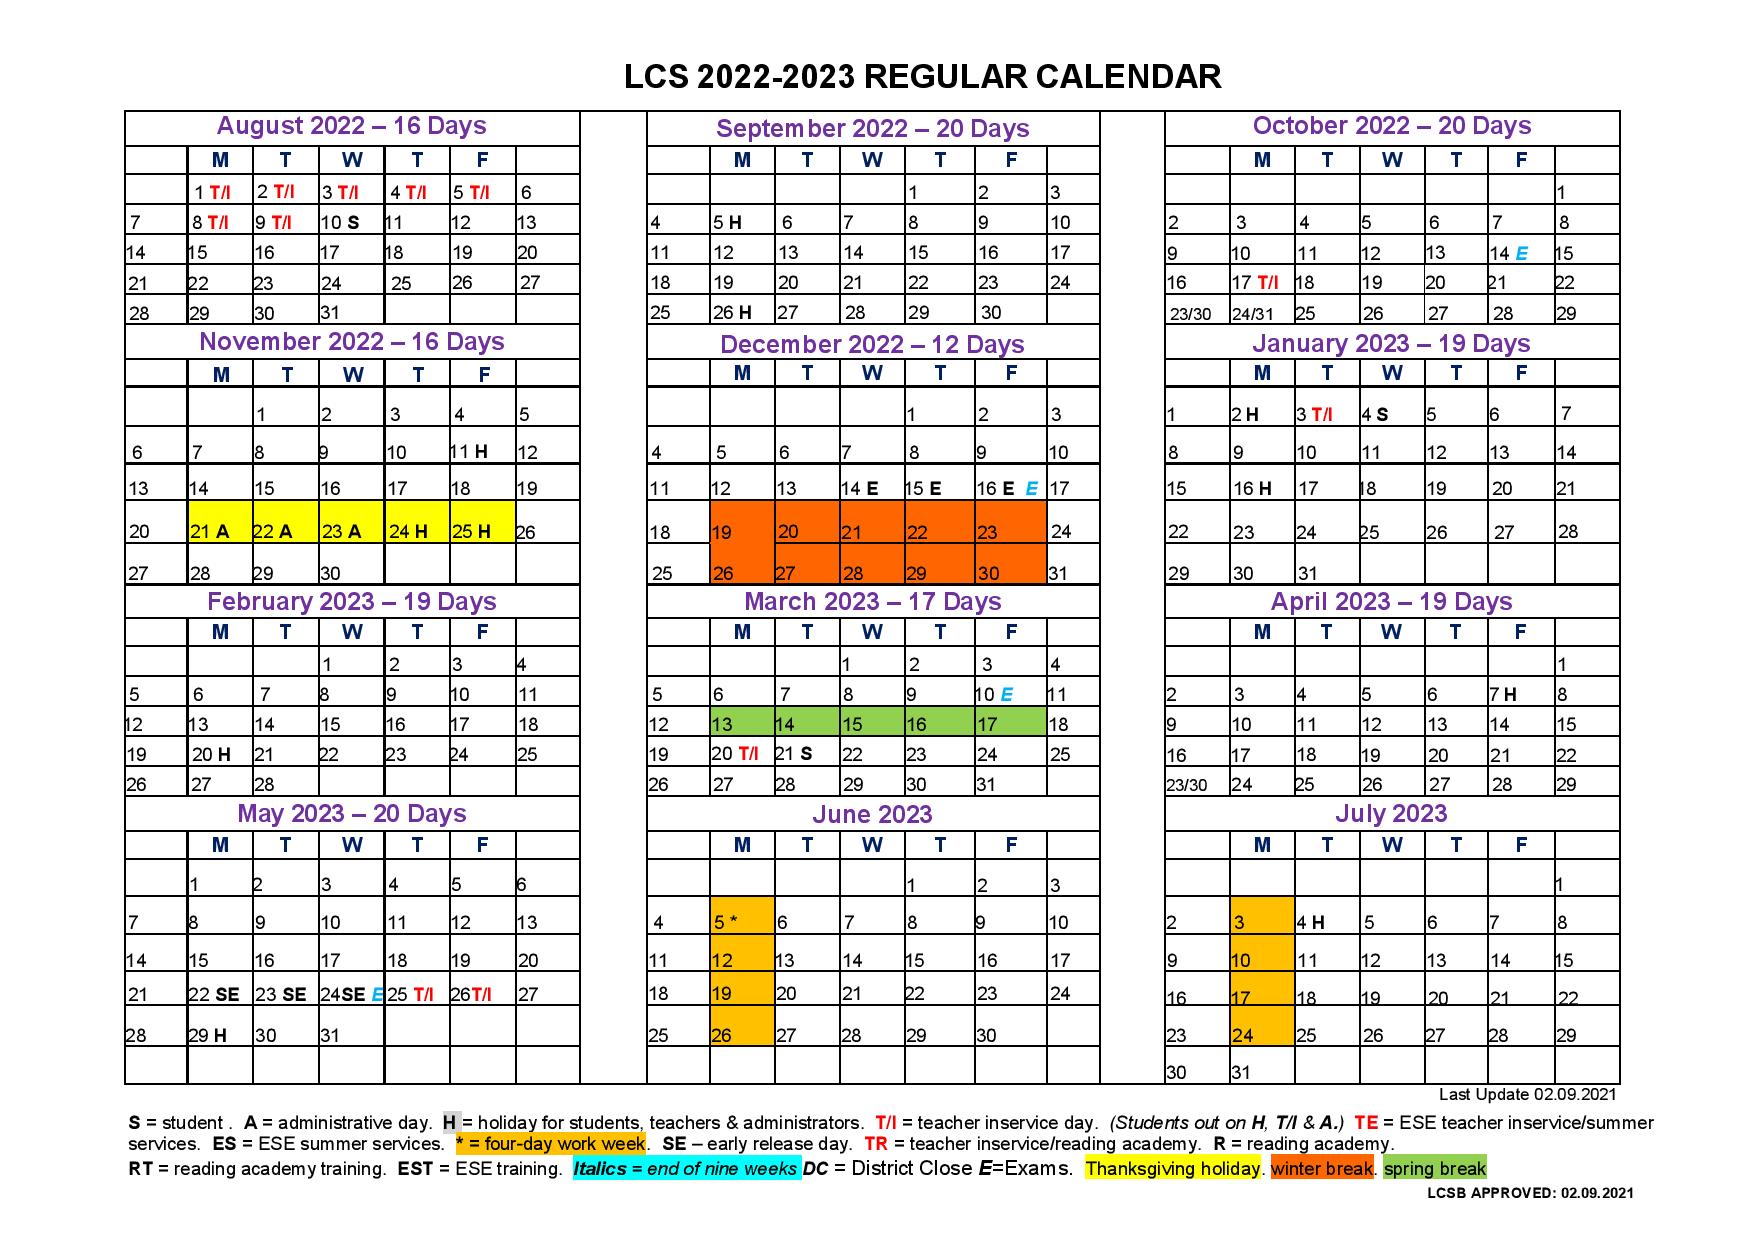 Leon County Schools Calendar Holidays 2022-2023 PDF